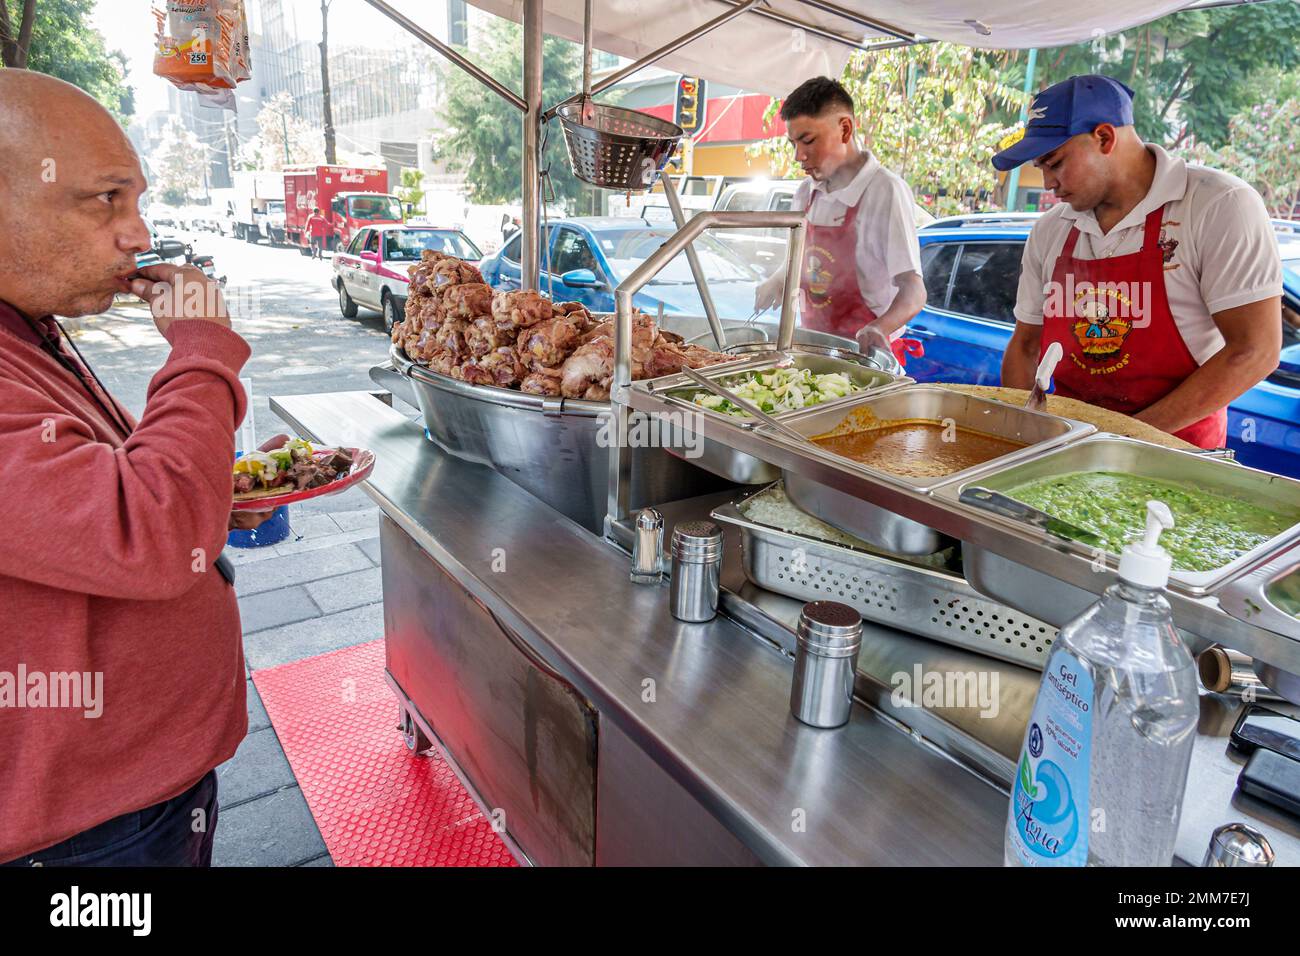 Mexico City,Avenida Paseo de la Reforma,street food vendor,cook cooking preparing eating,carnitas tacos,man men male,adult adults,resident residents Stock Photo